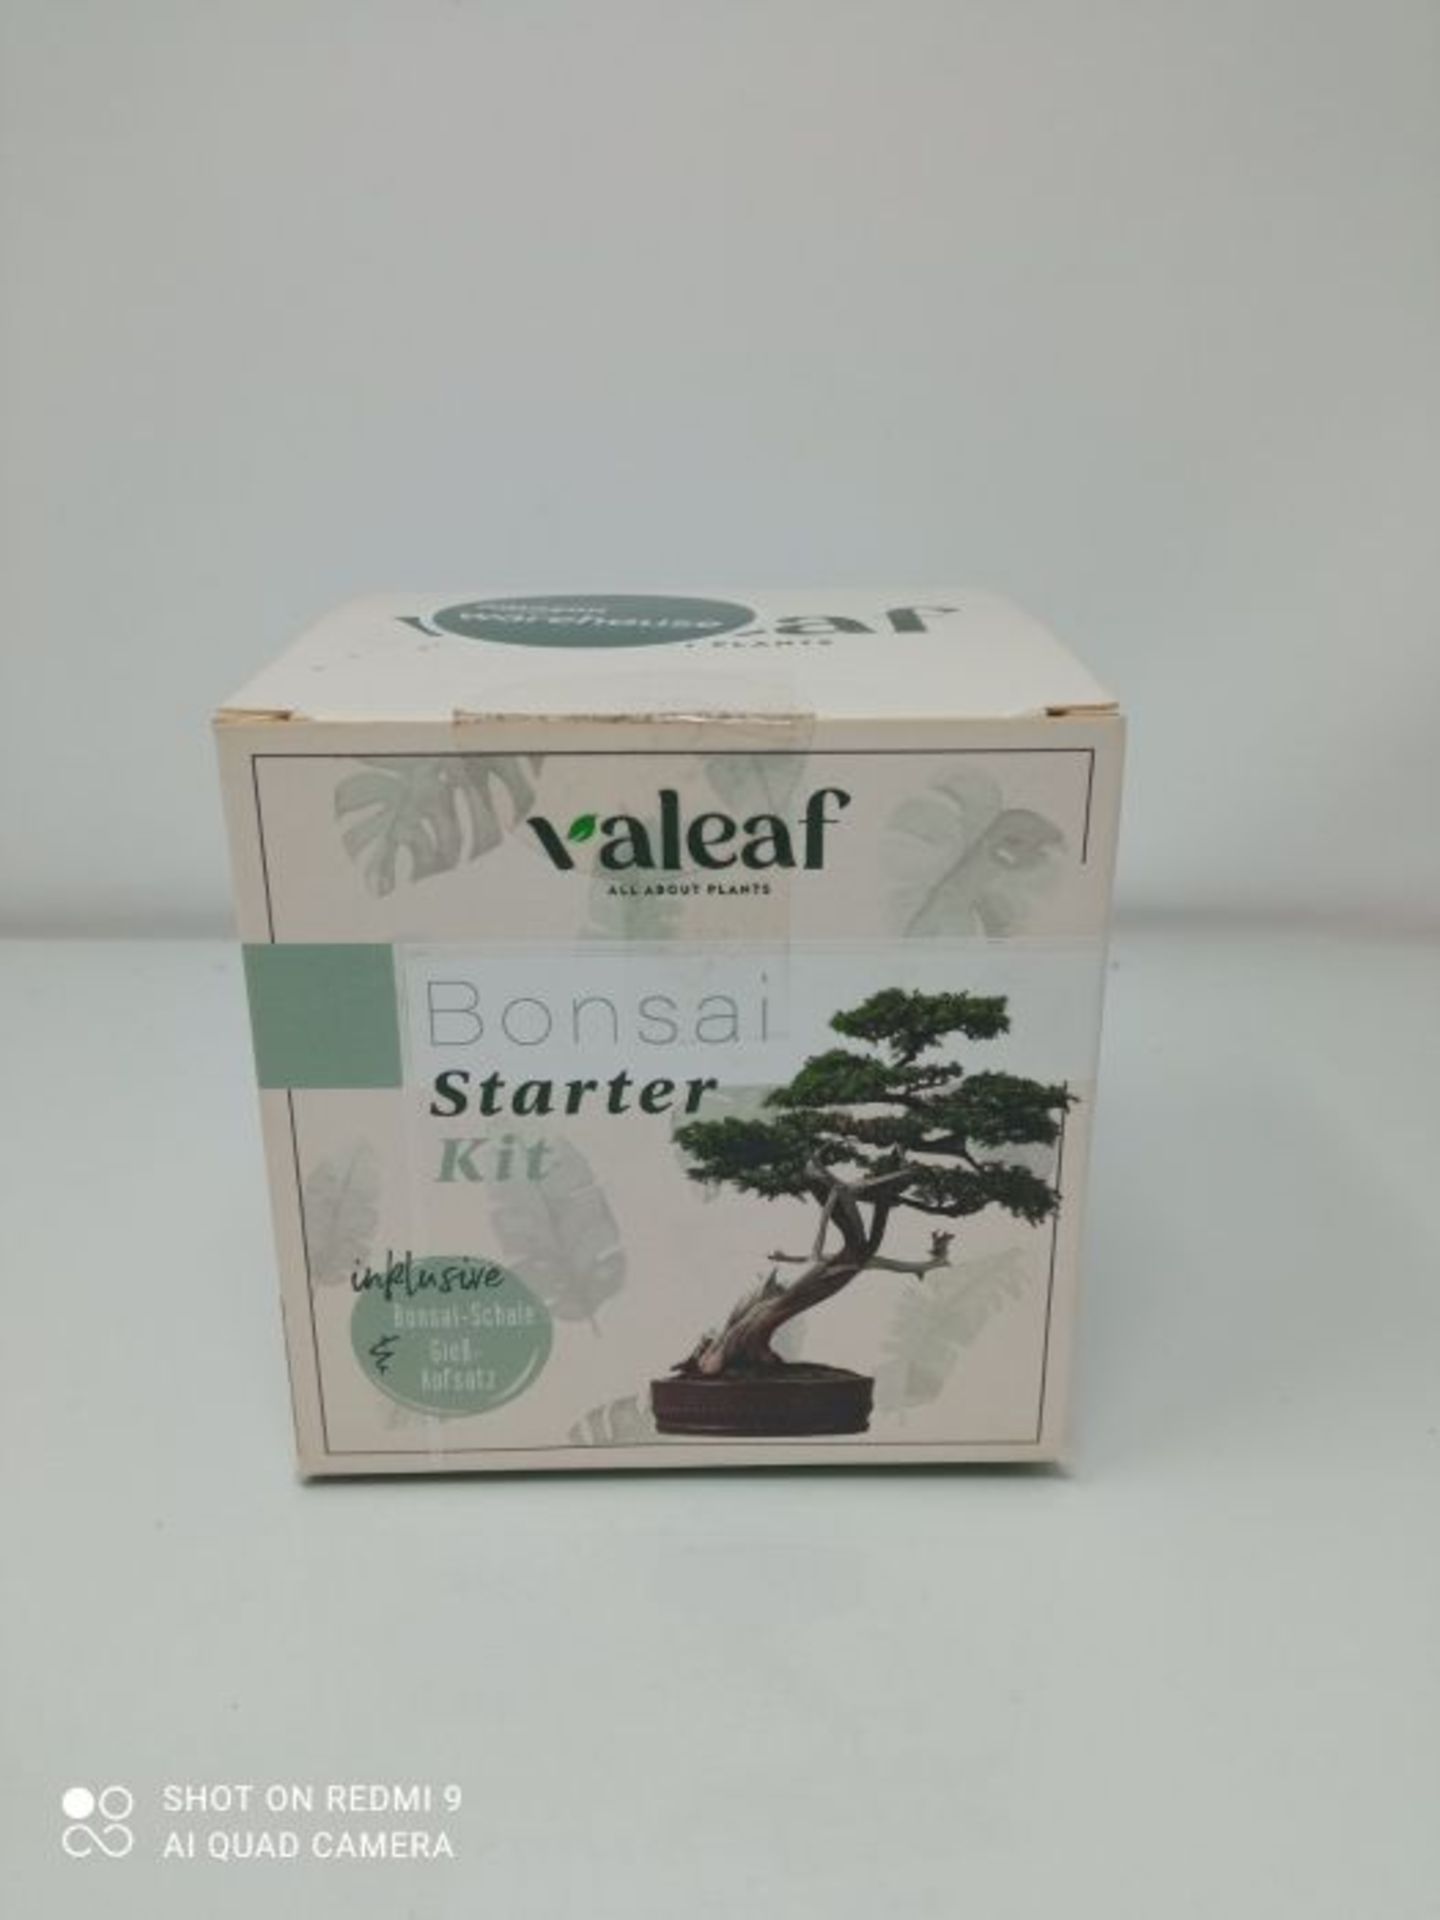 Valeaf Bonsai Starter Kit - Summer Sale, Grow Your Own Bonsai Tree - Growing Set Inclu - Image 2 of 3